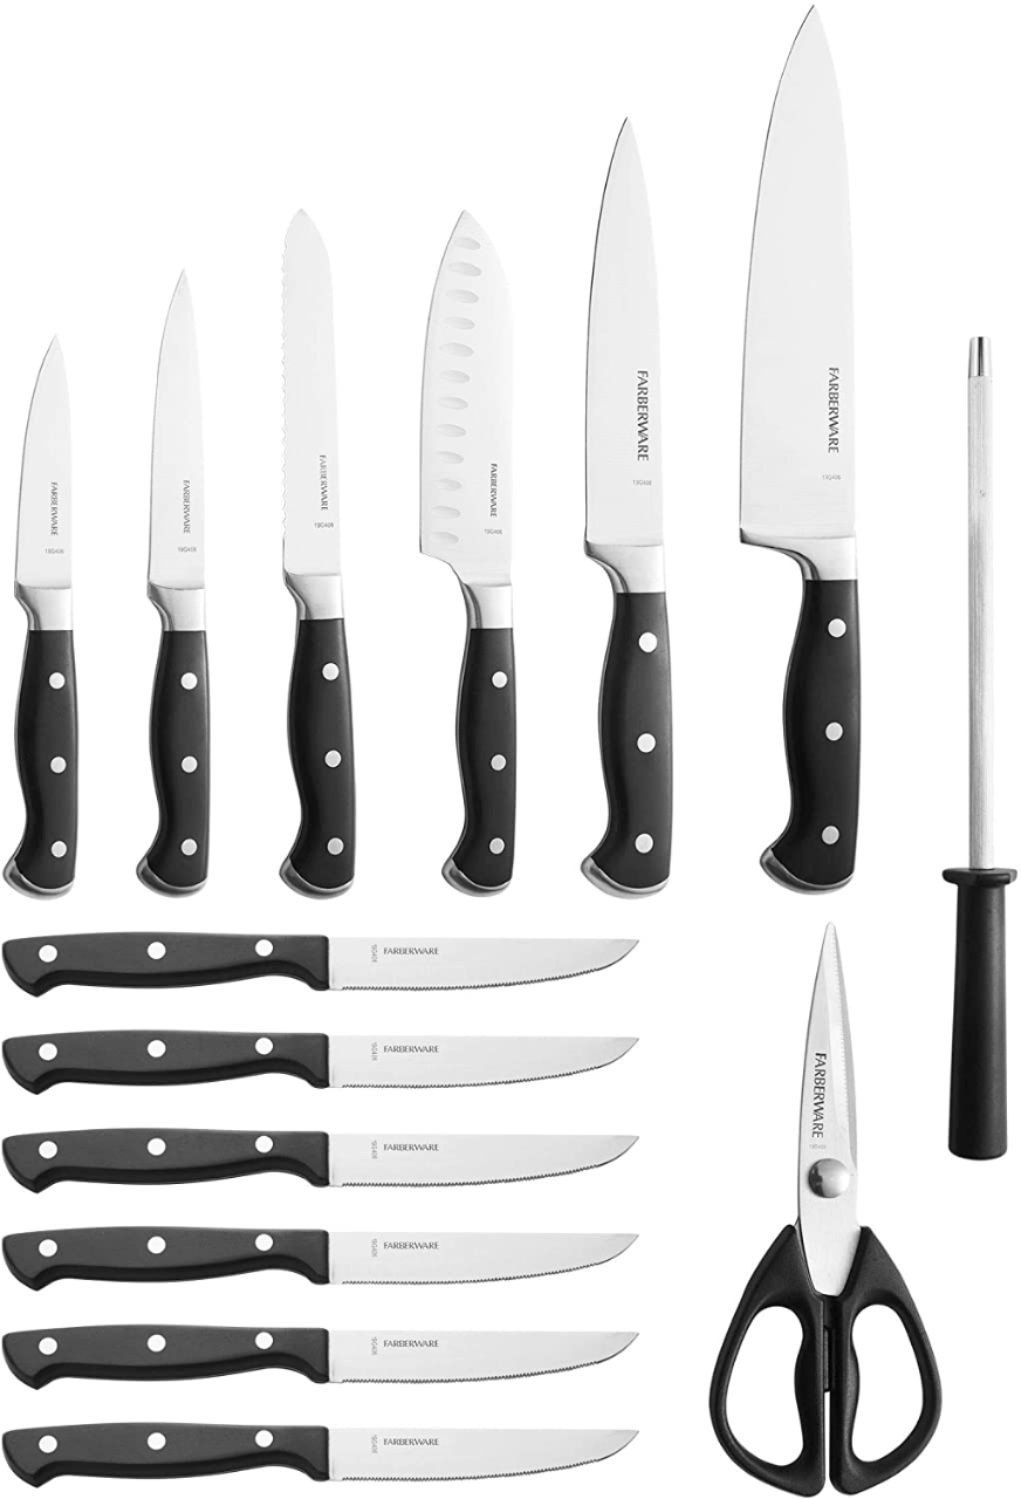 Best Buy: Farberware Forged Triple Rivet 15-Piece Cutlery Set